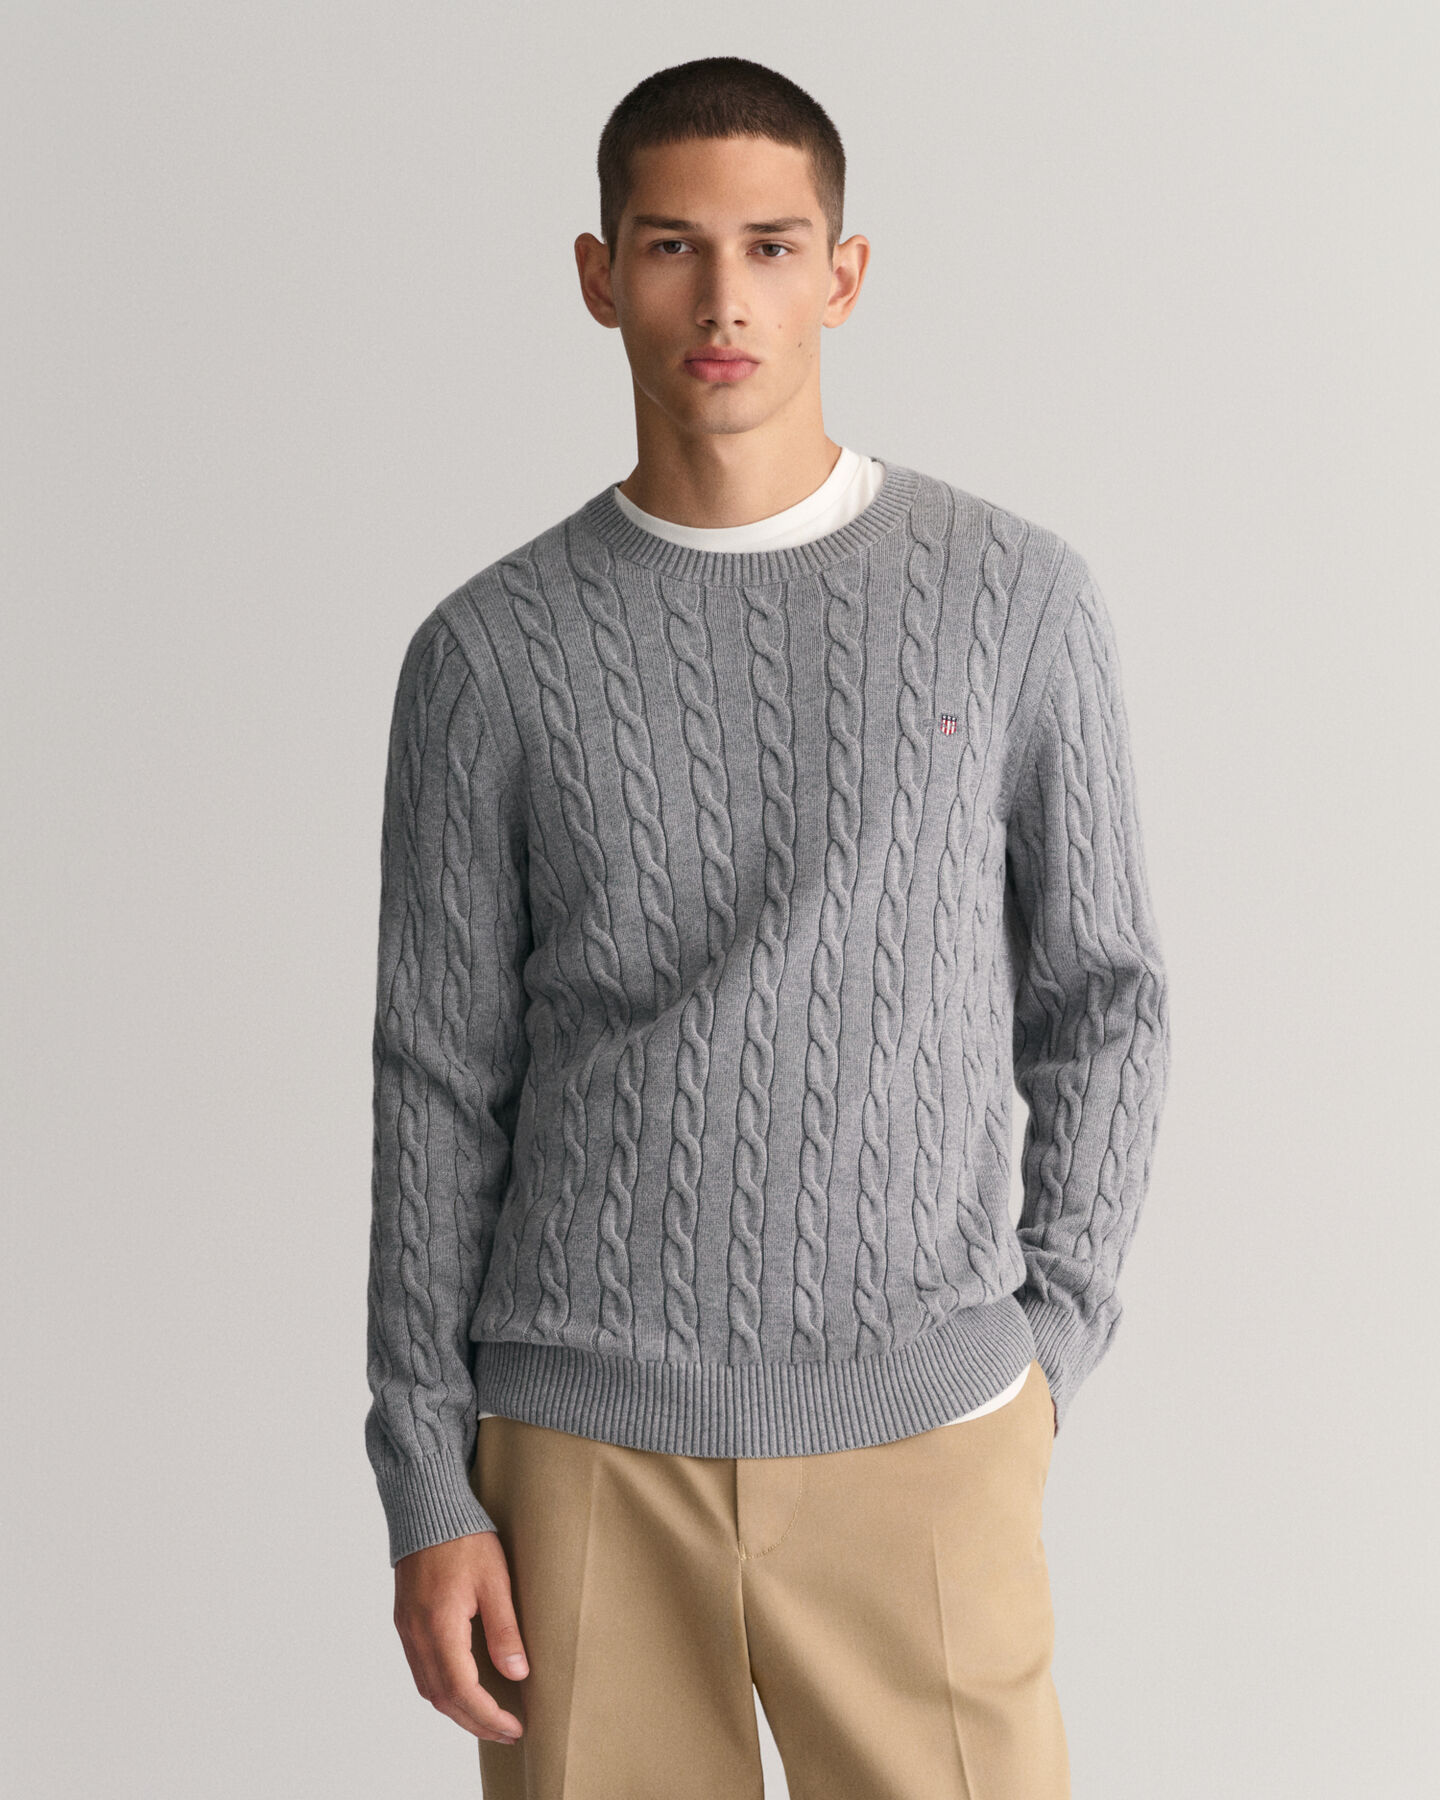 Light Grey, 100% Cotton Crew Neck Sweater